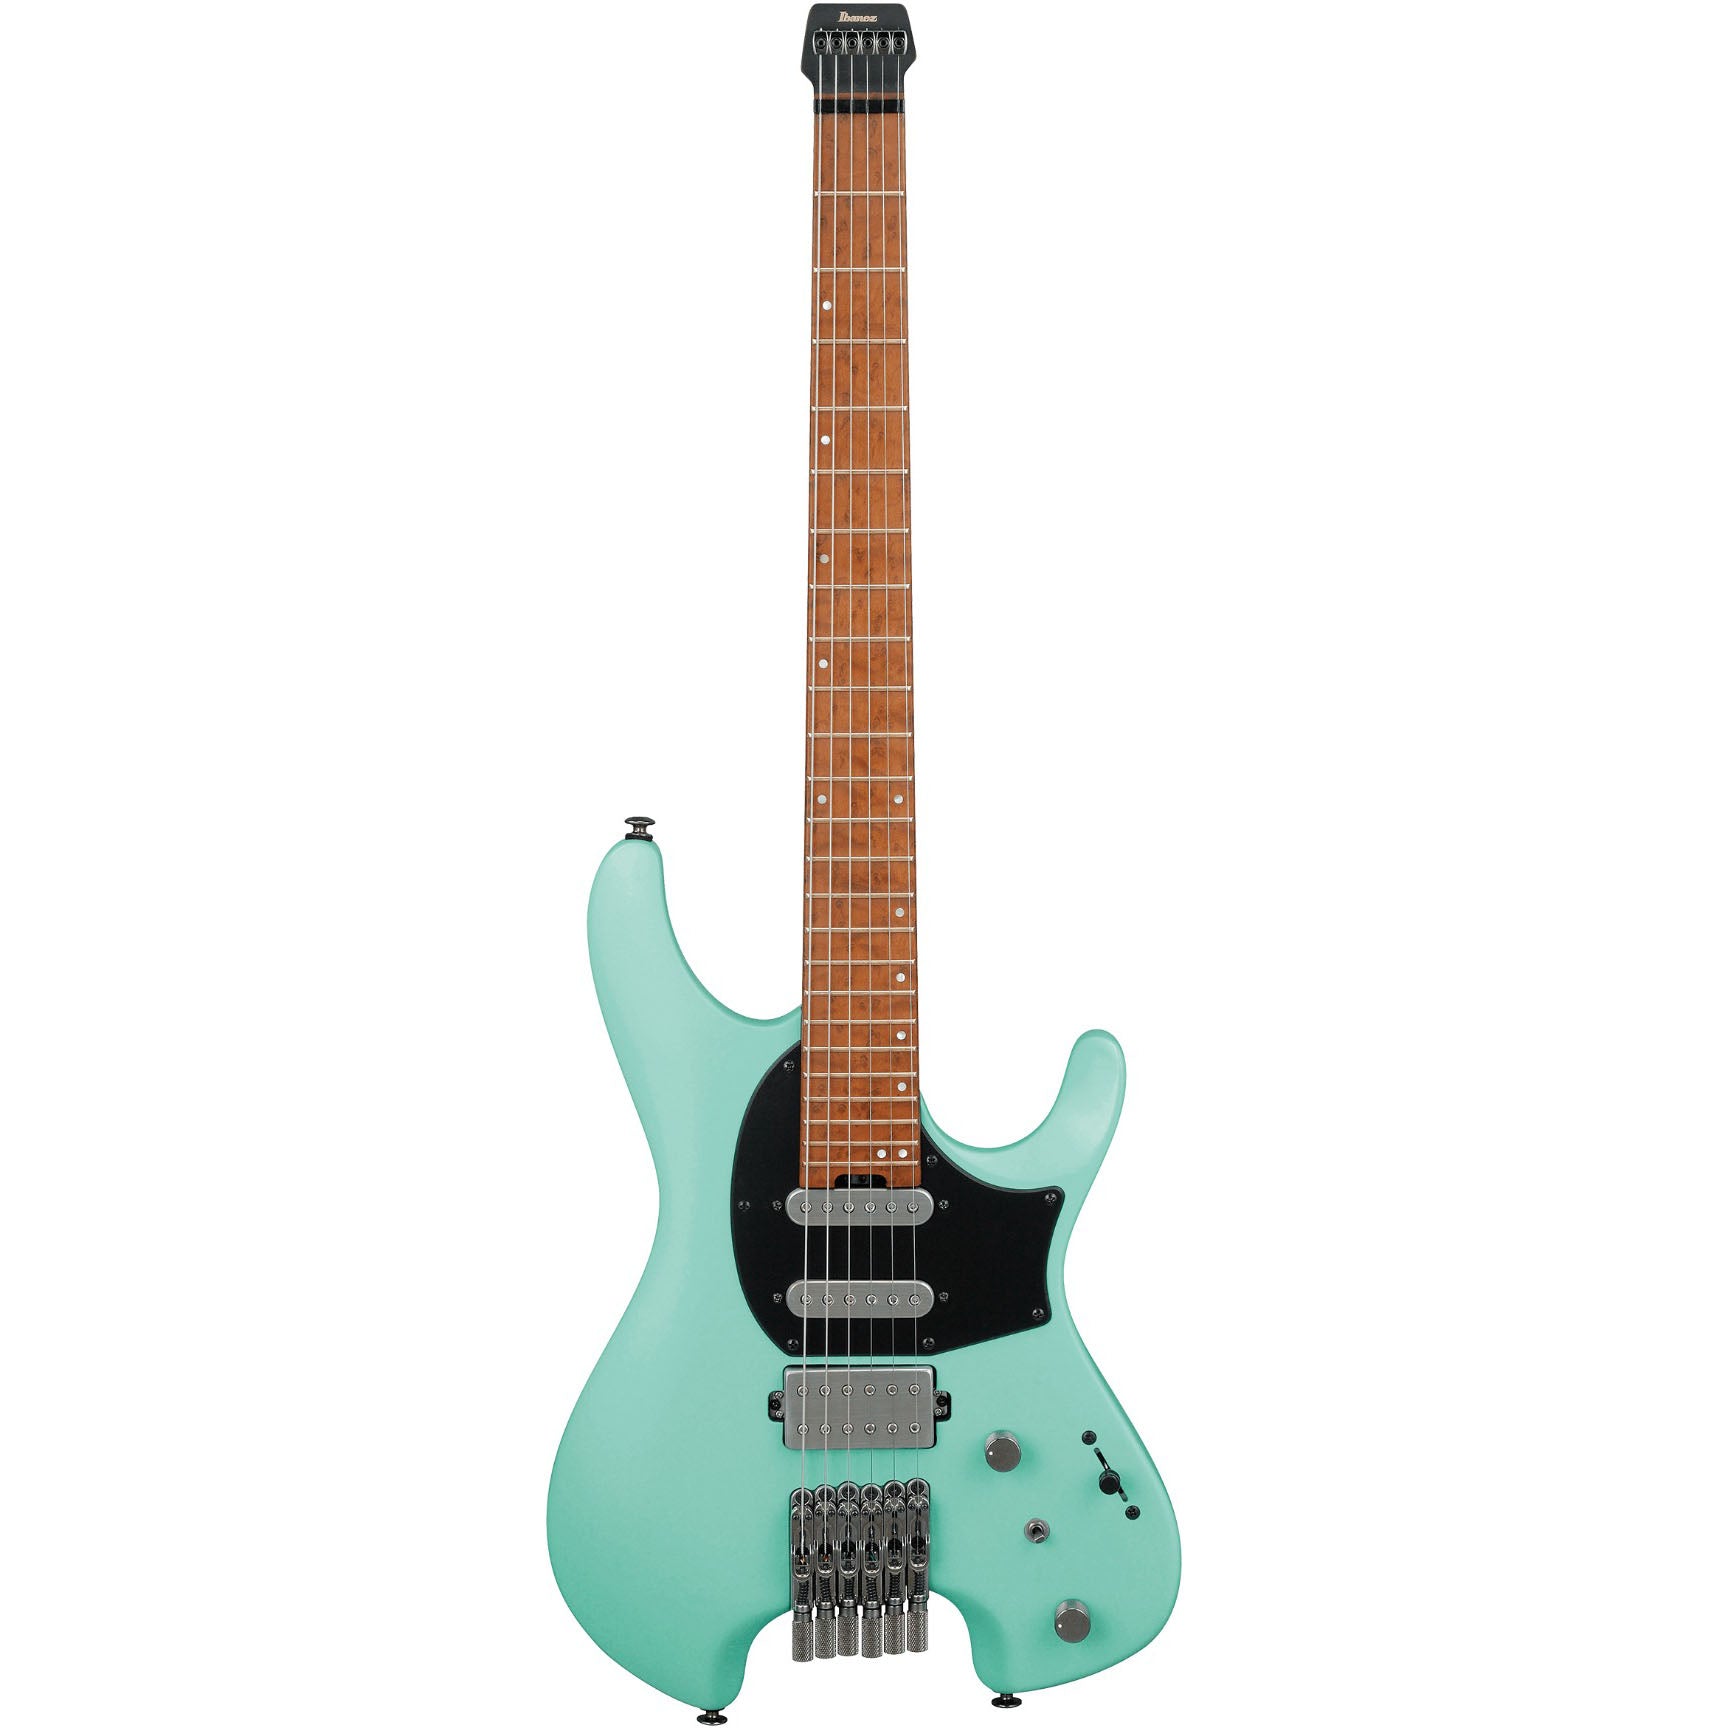 Ibanez Q54SFM Q Standard 6 String Electric Guitar in Sea Foam Green